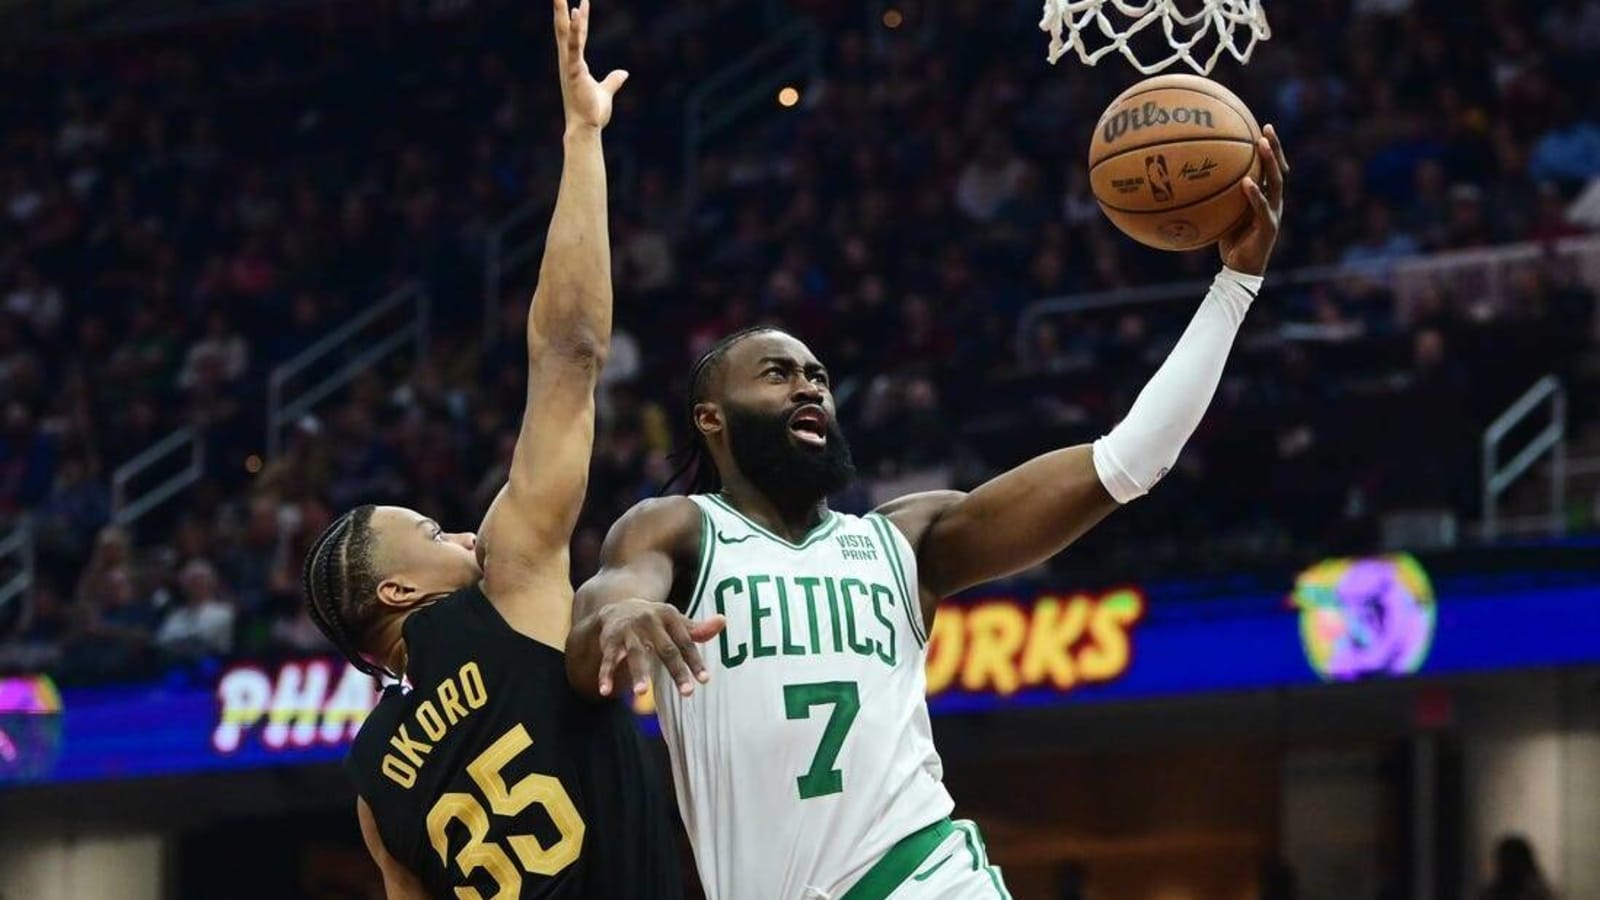 Cavs overcome 22-point deficit in fourth, stun Celtics